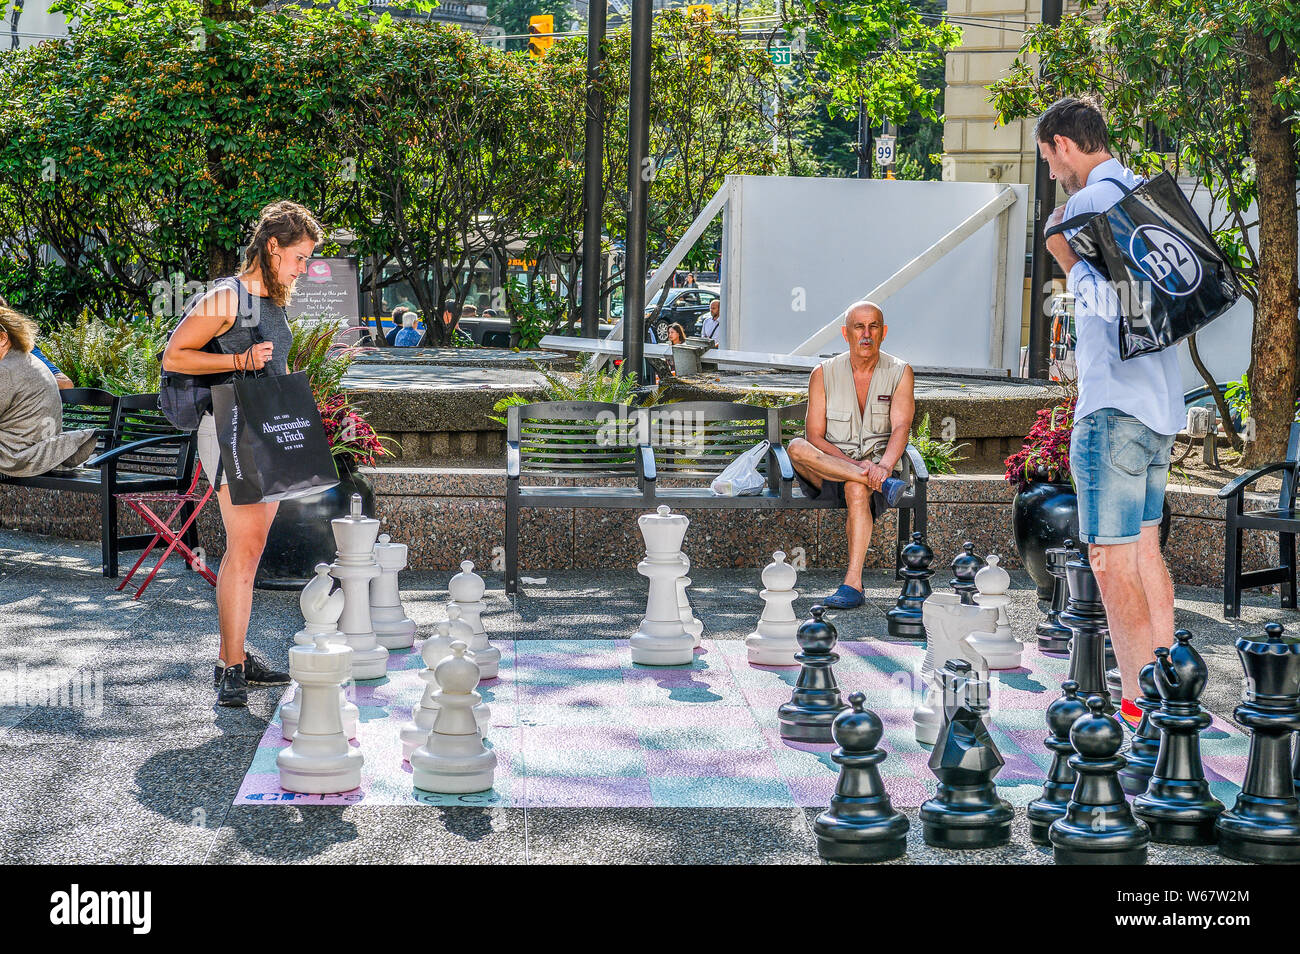 chess in public, Vancouver, British Columbia, Canada Stock Photo